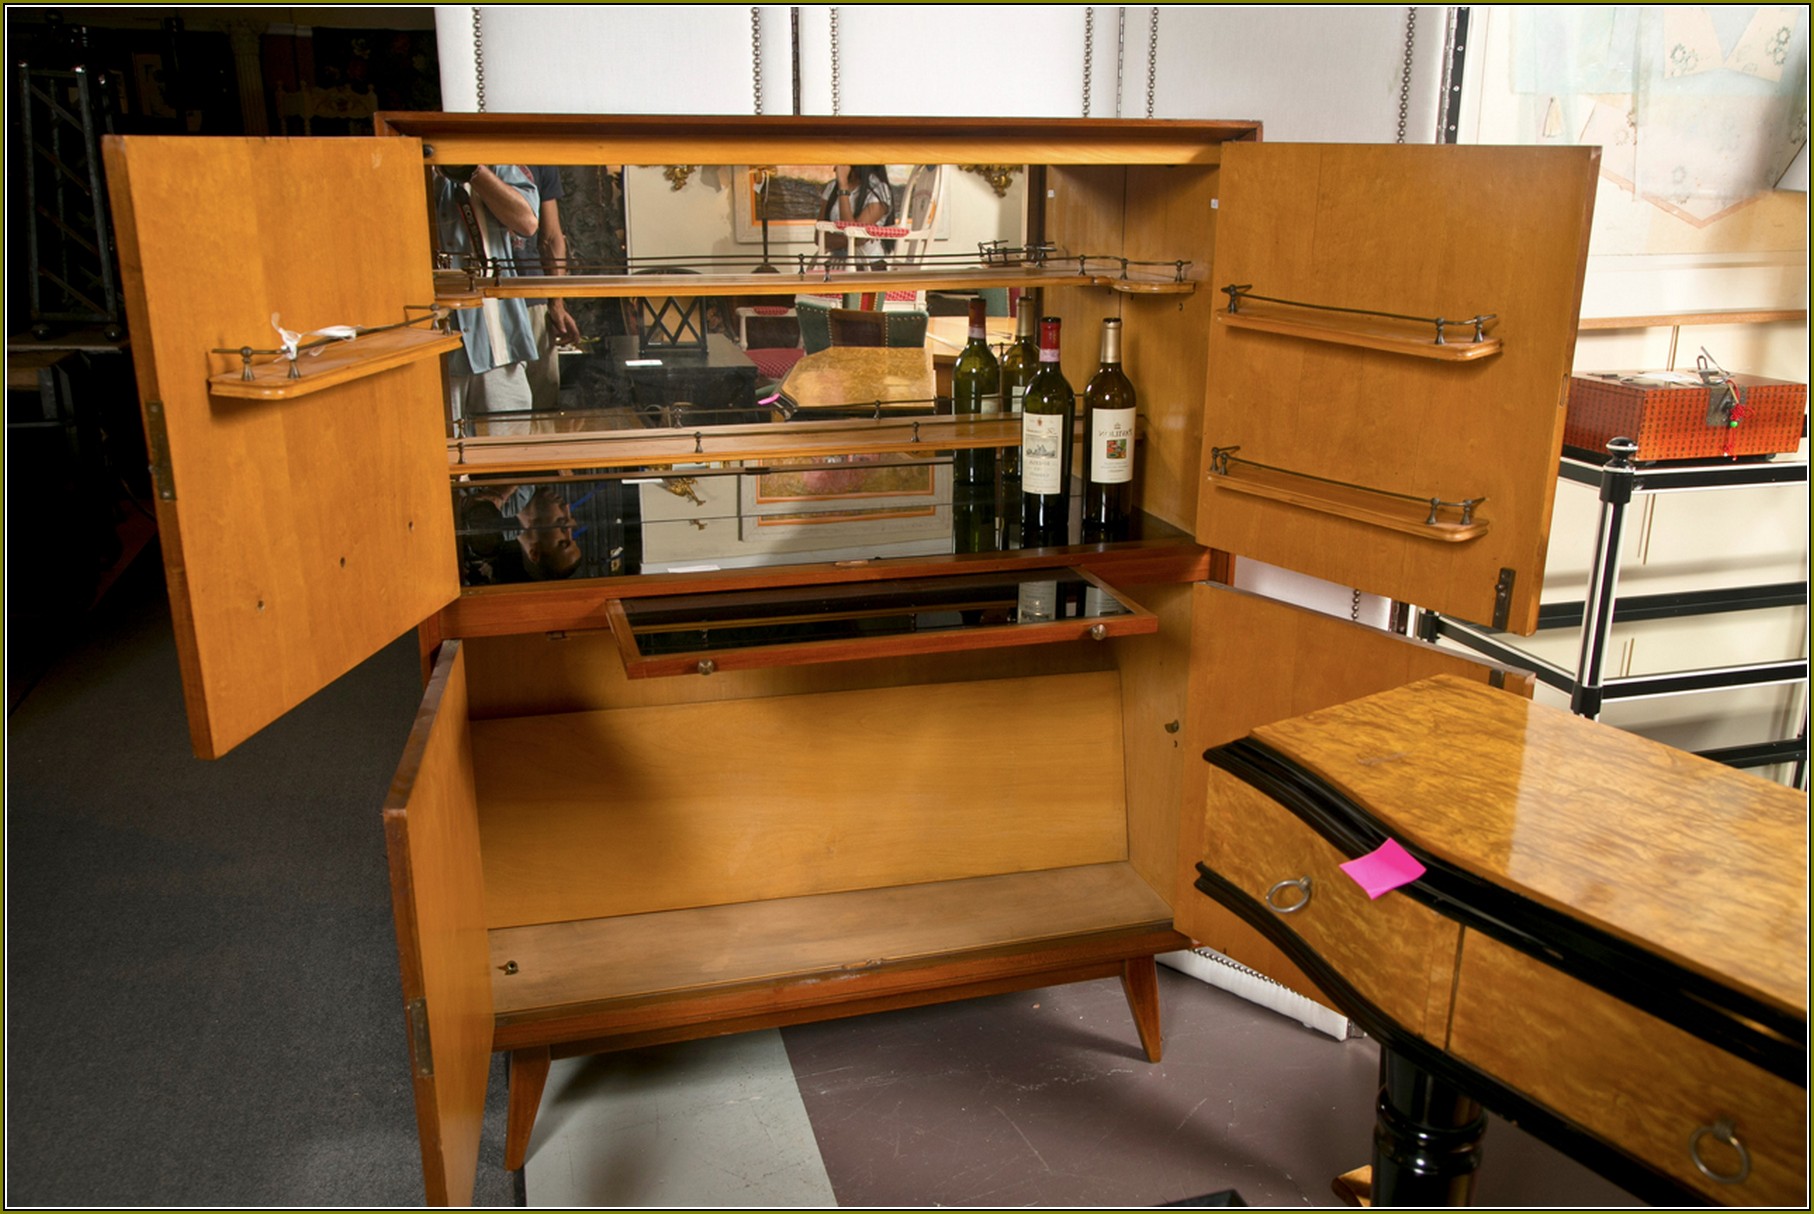 Mid Century Modern Curio Cabinet